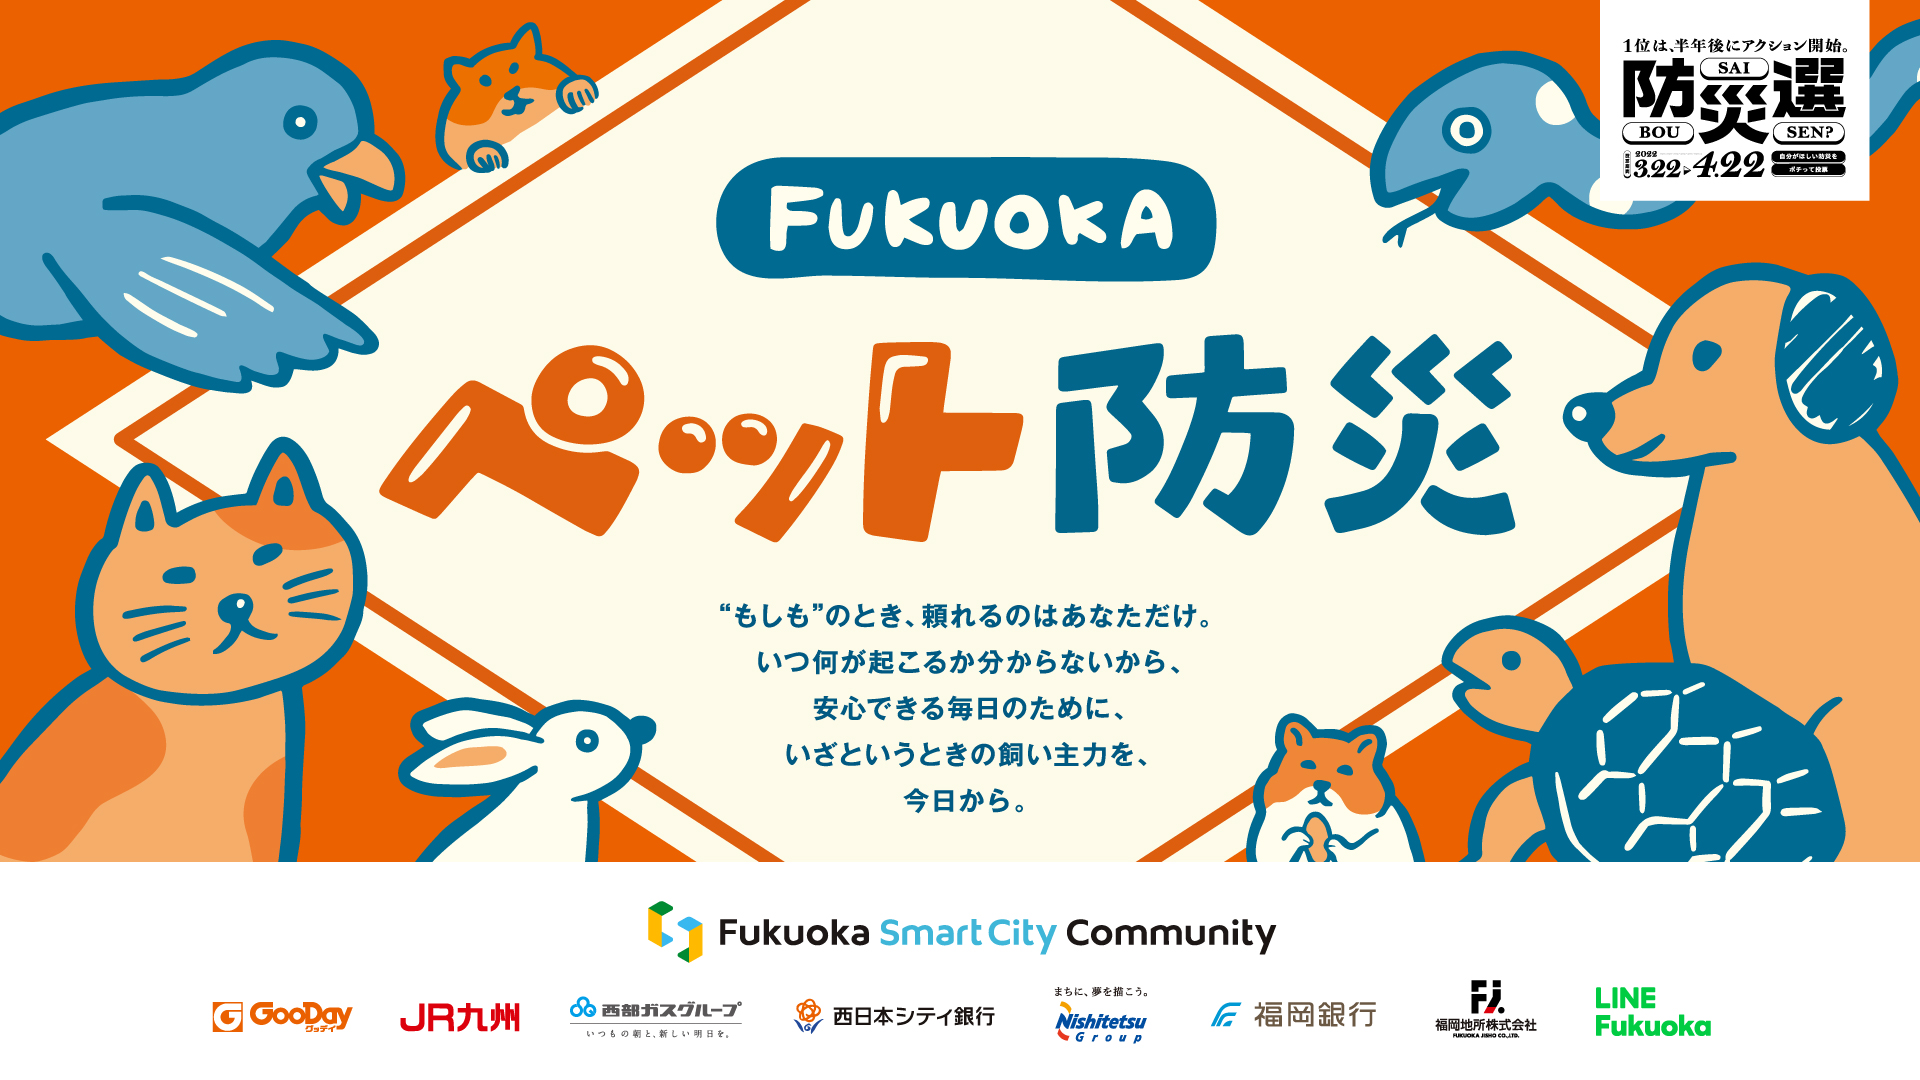 FUKUOKA ペット防災 (Fukuoka Smart City Community)